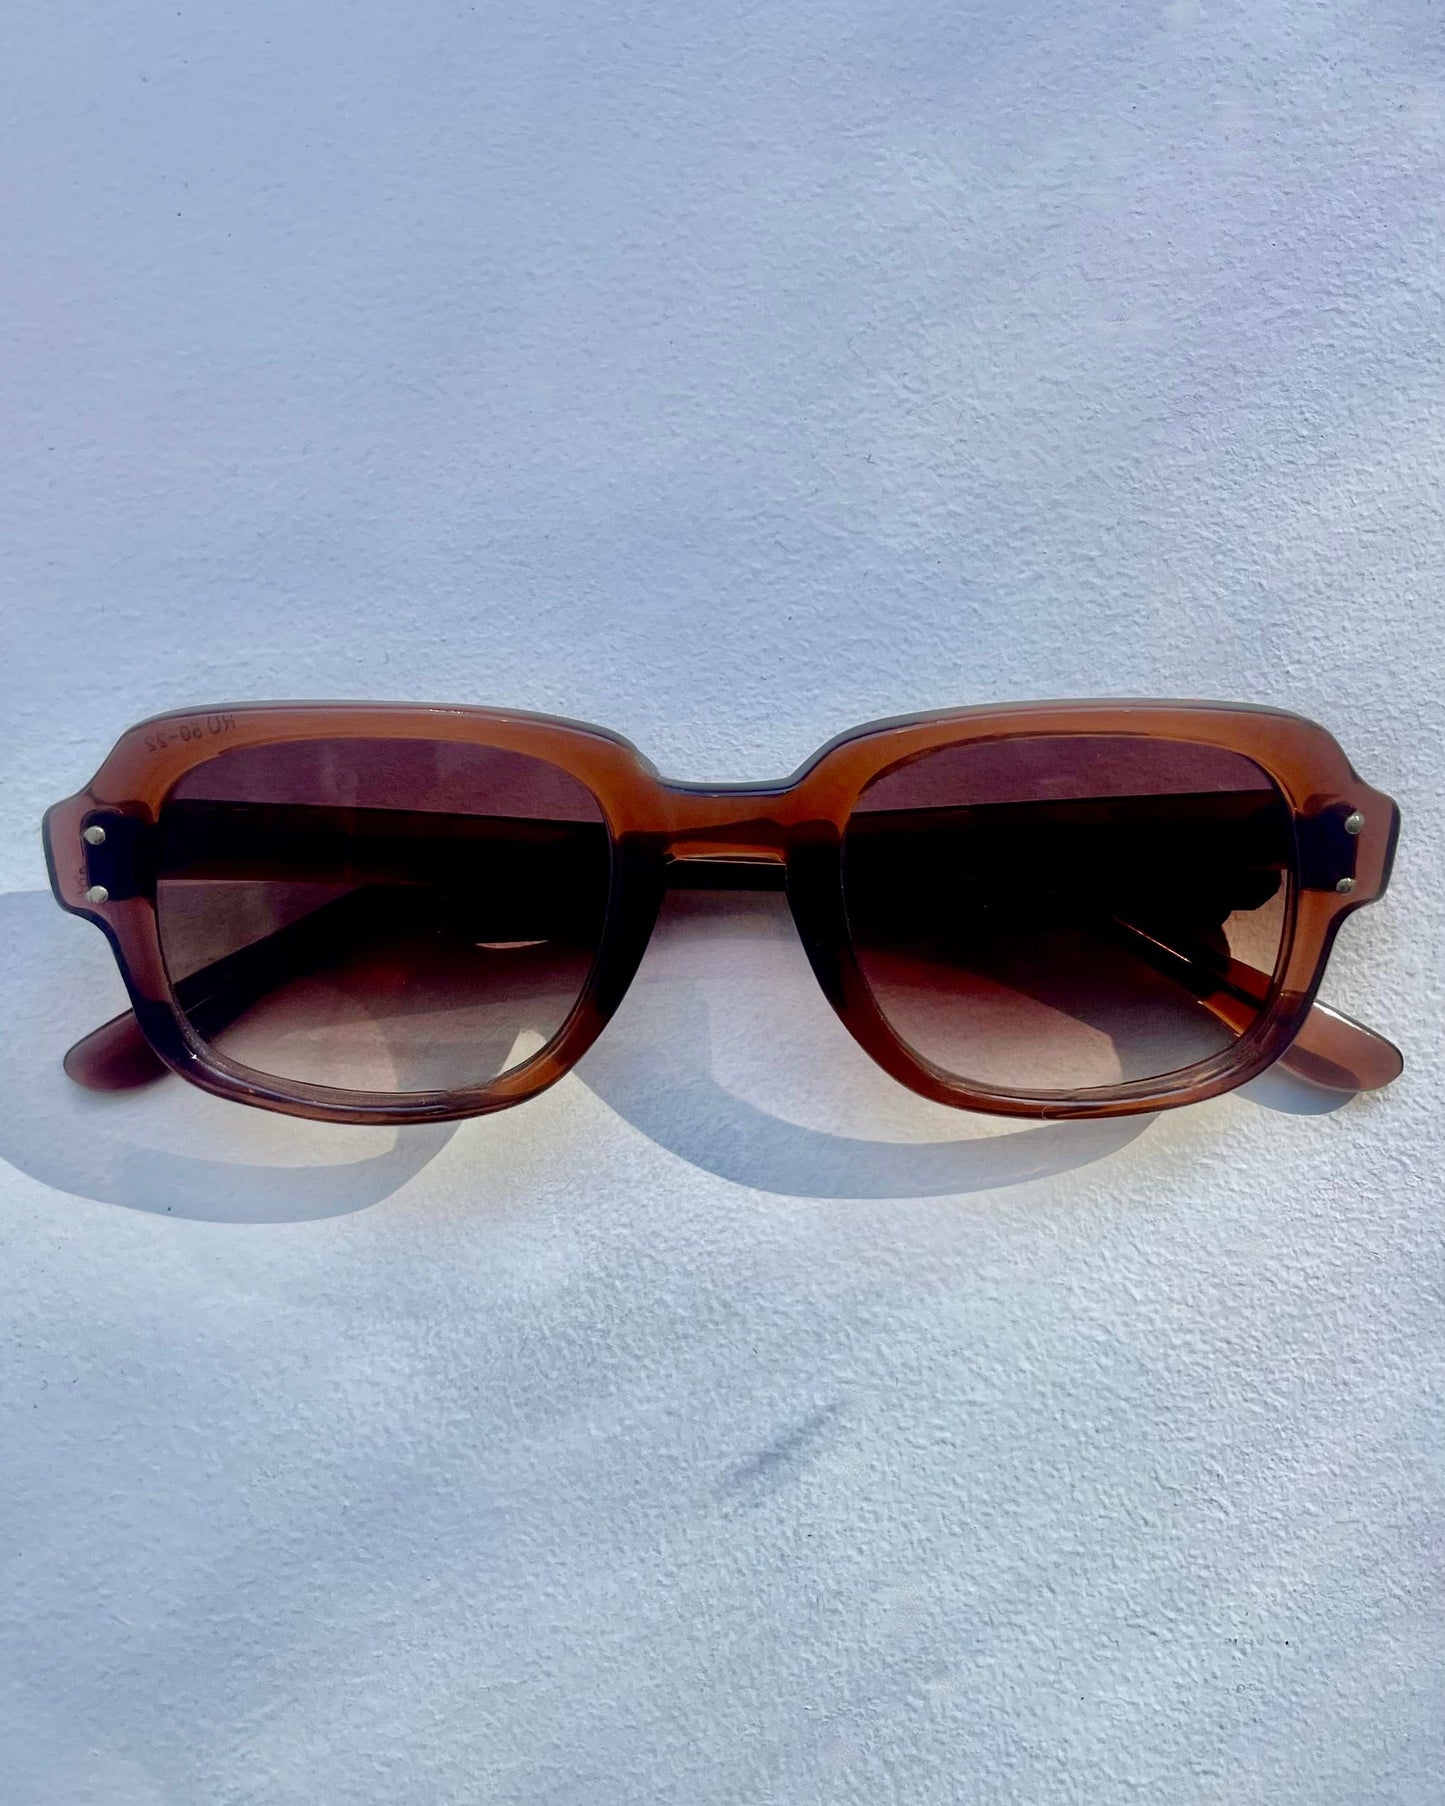 Romco 70s Vintage Sunglasses Accessories Vintage Shades   